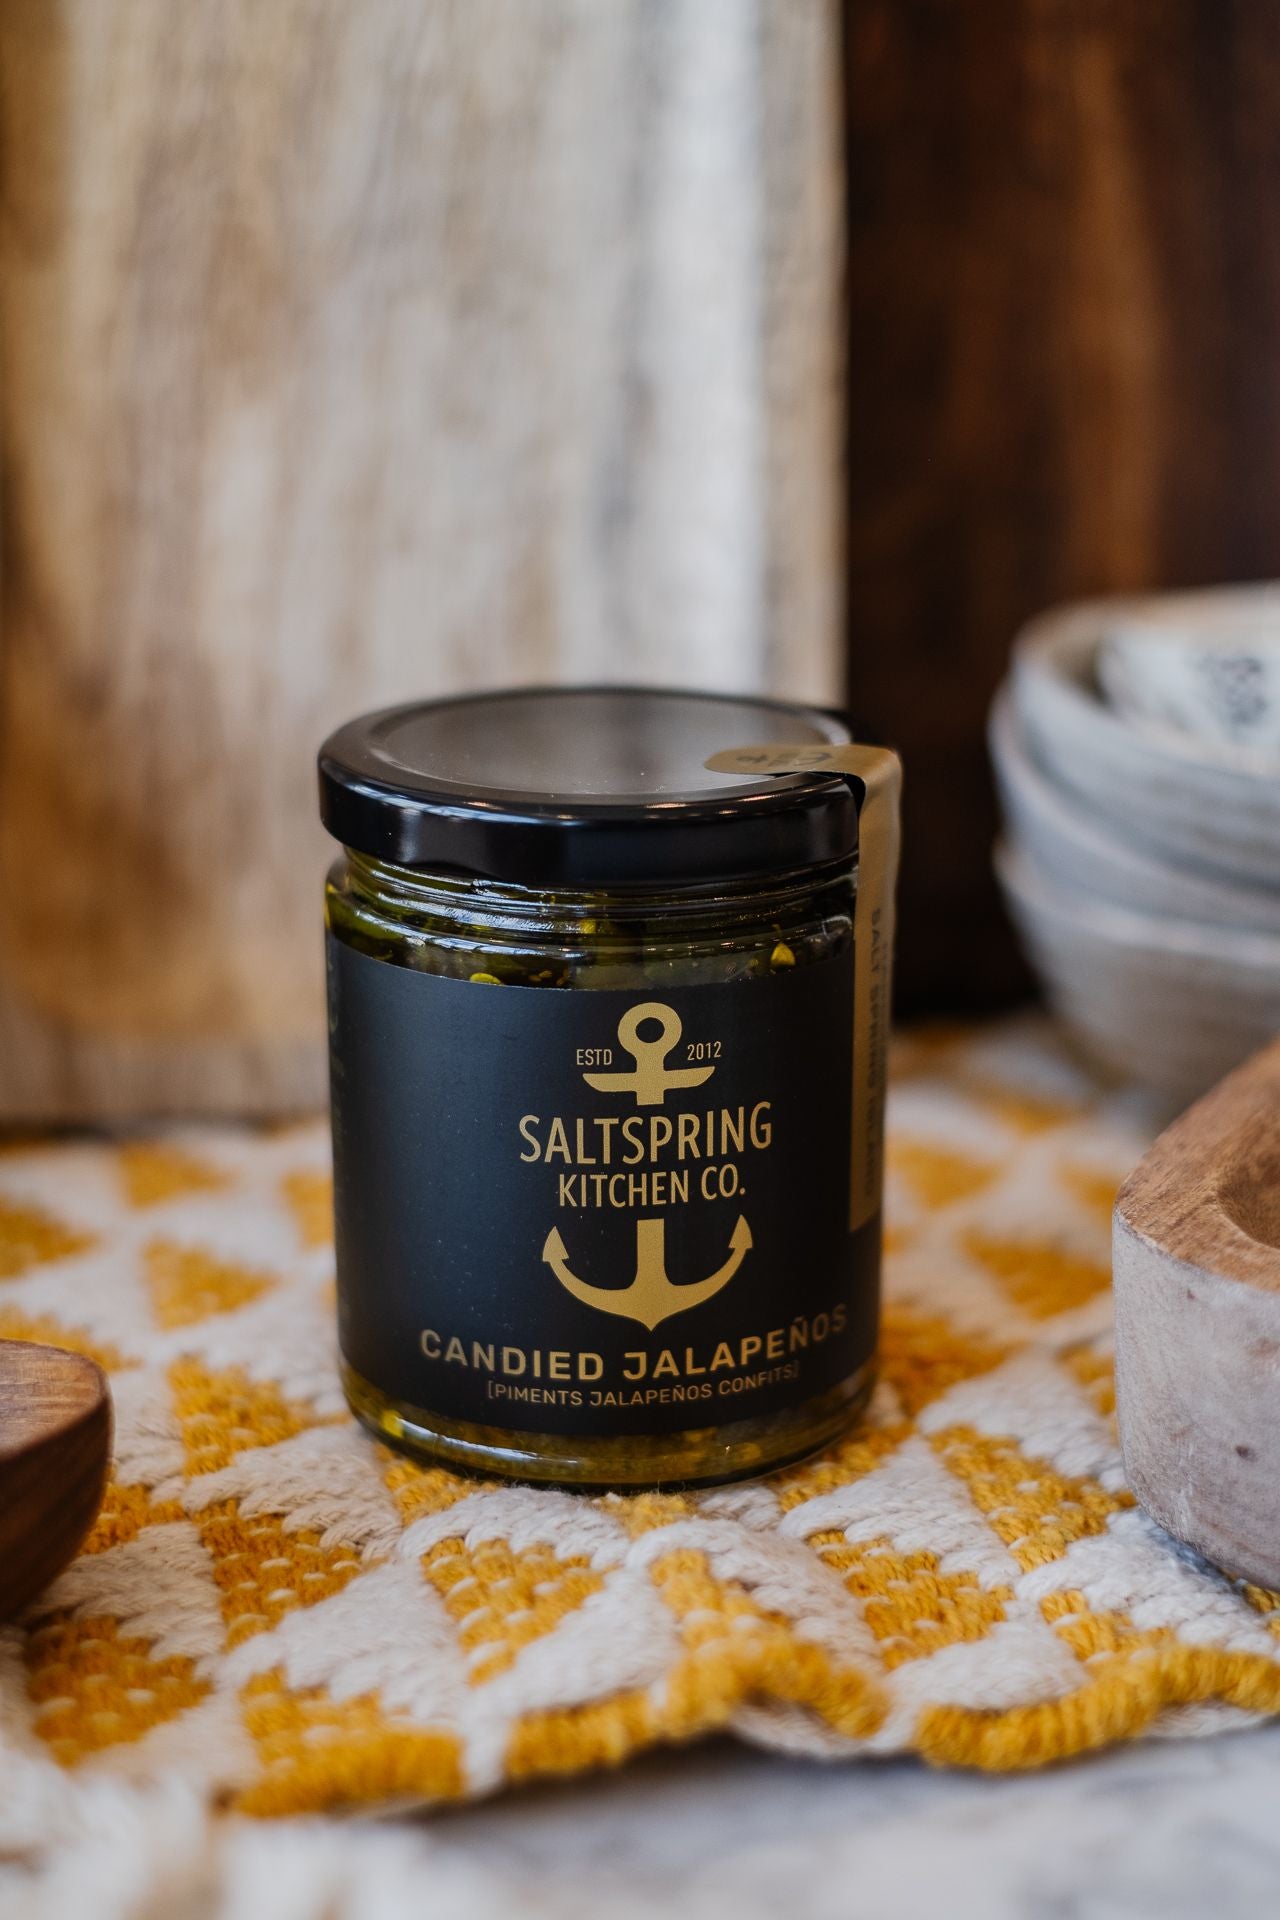 Saltspring Candied Jalapenos